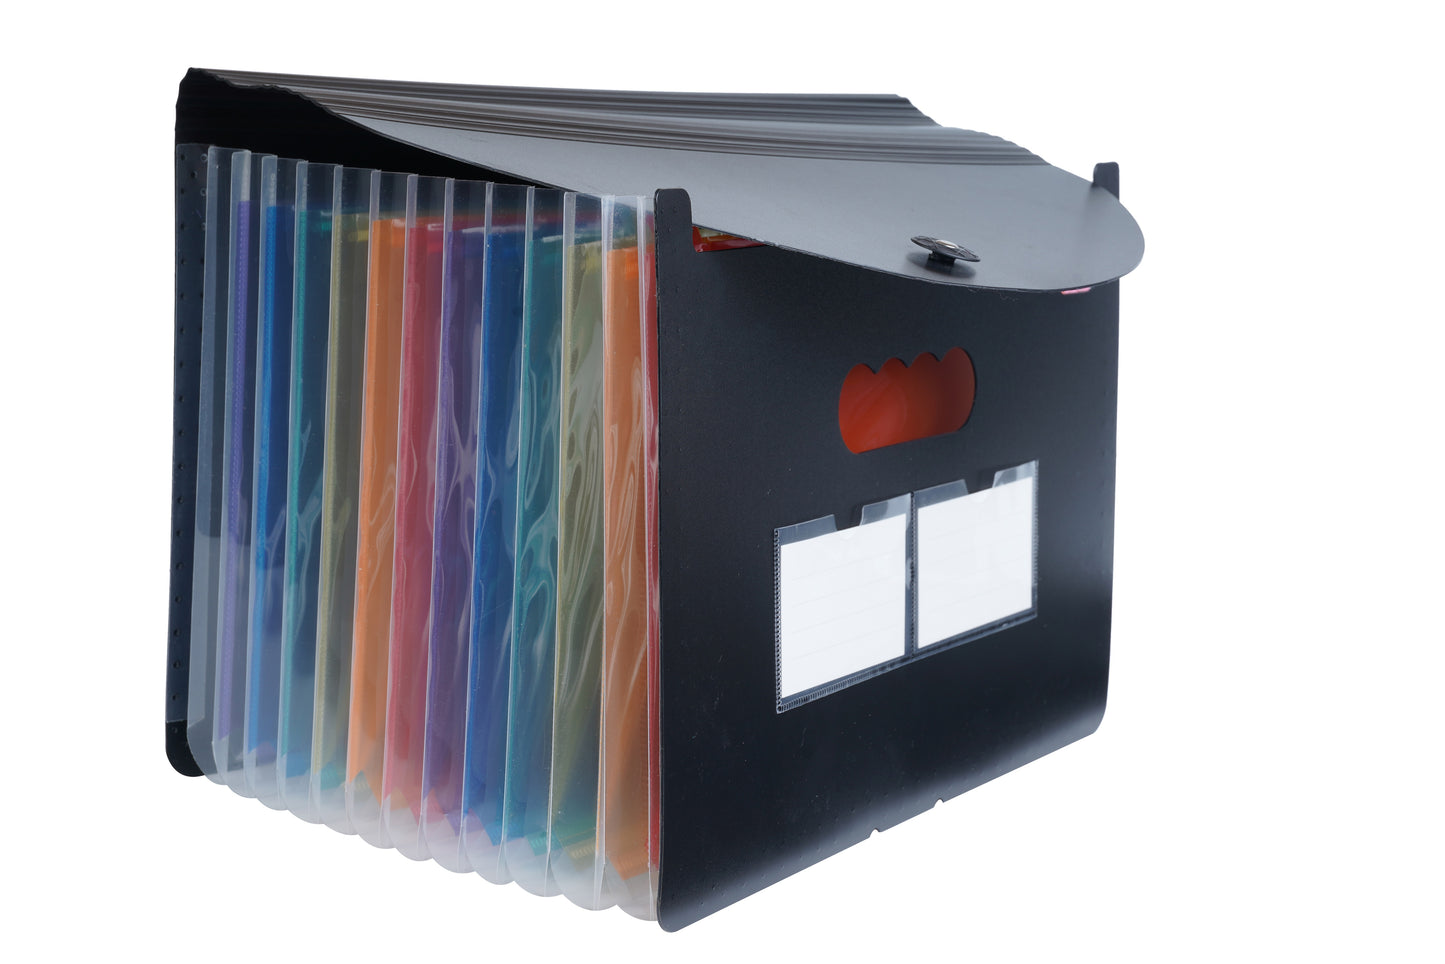 Brustro EZExpand A4 Folder 13 Pocket Expanding File Folder, Accordion Document Organizer for School, Home & Office